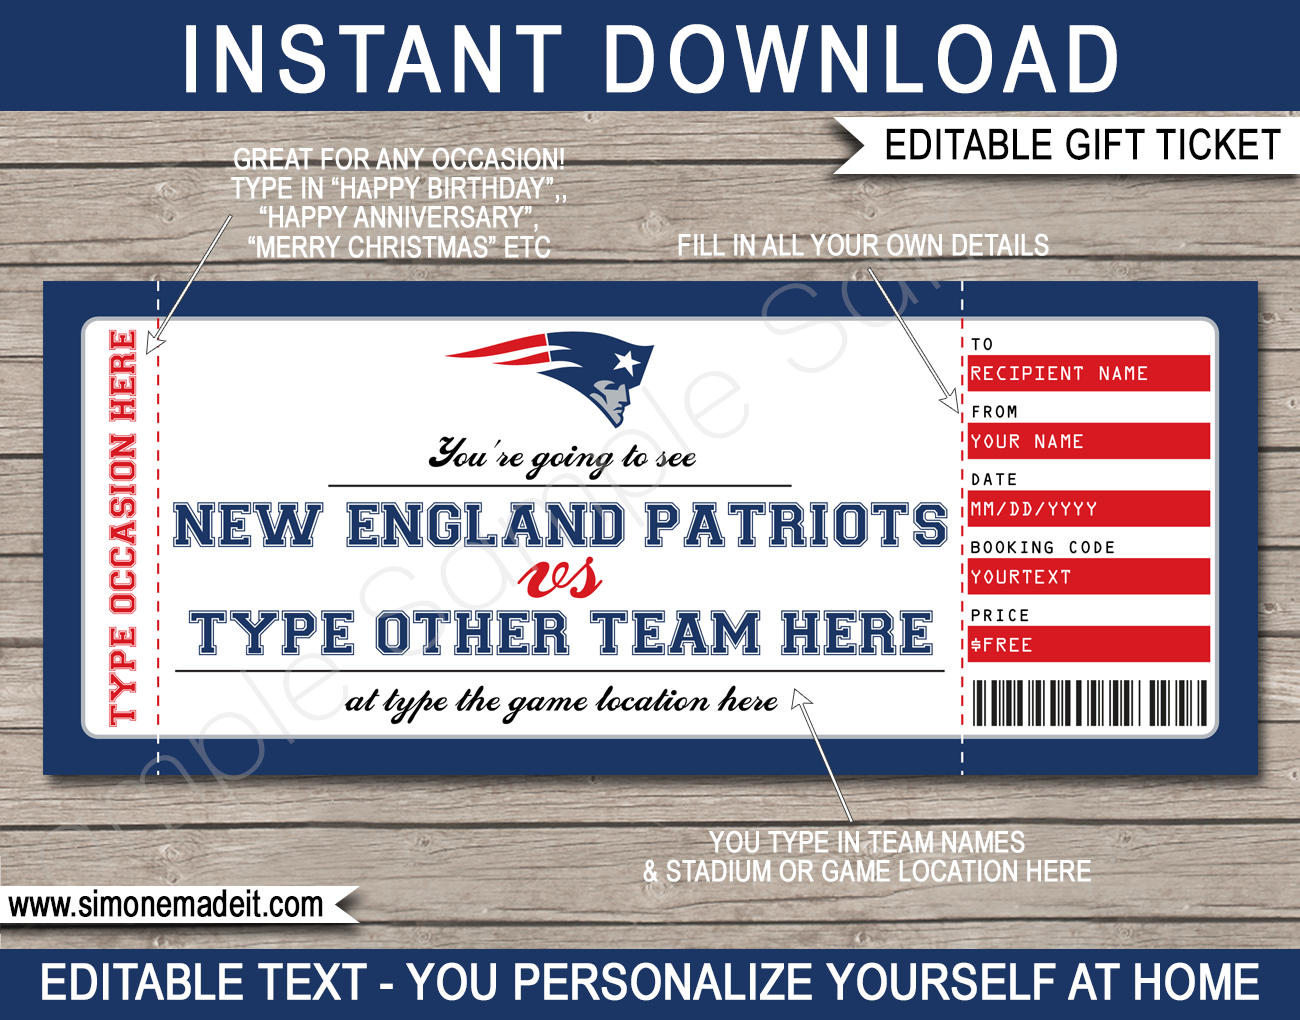 New England Patriots Game Ticket Gift Voucher